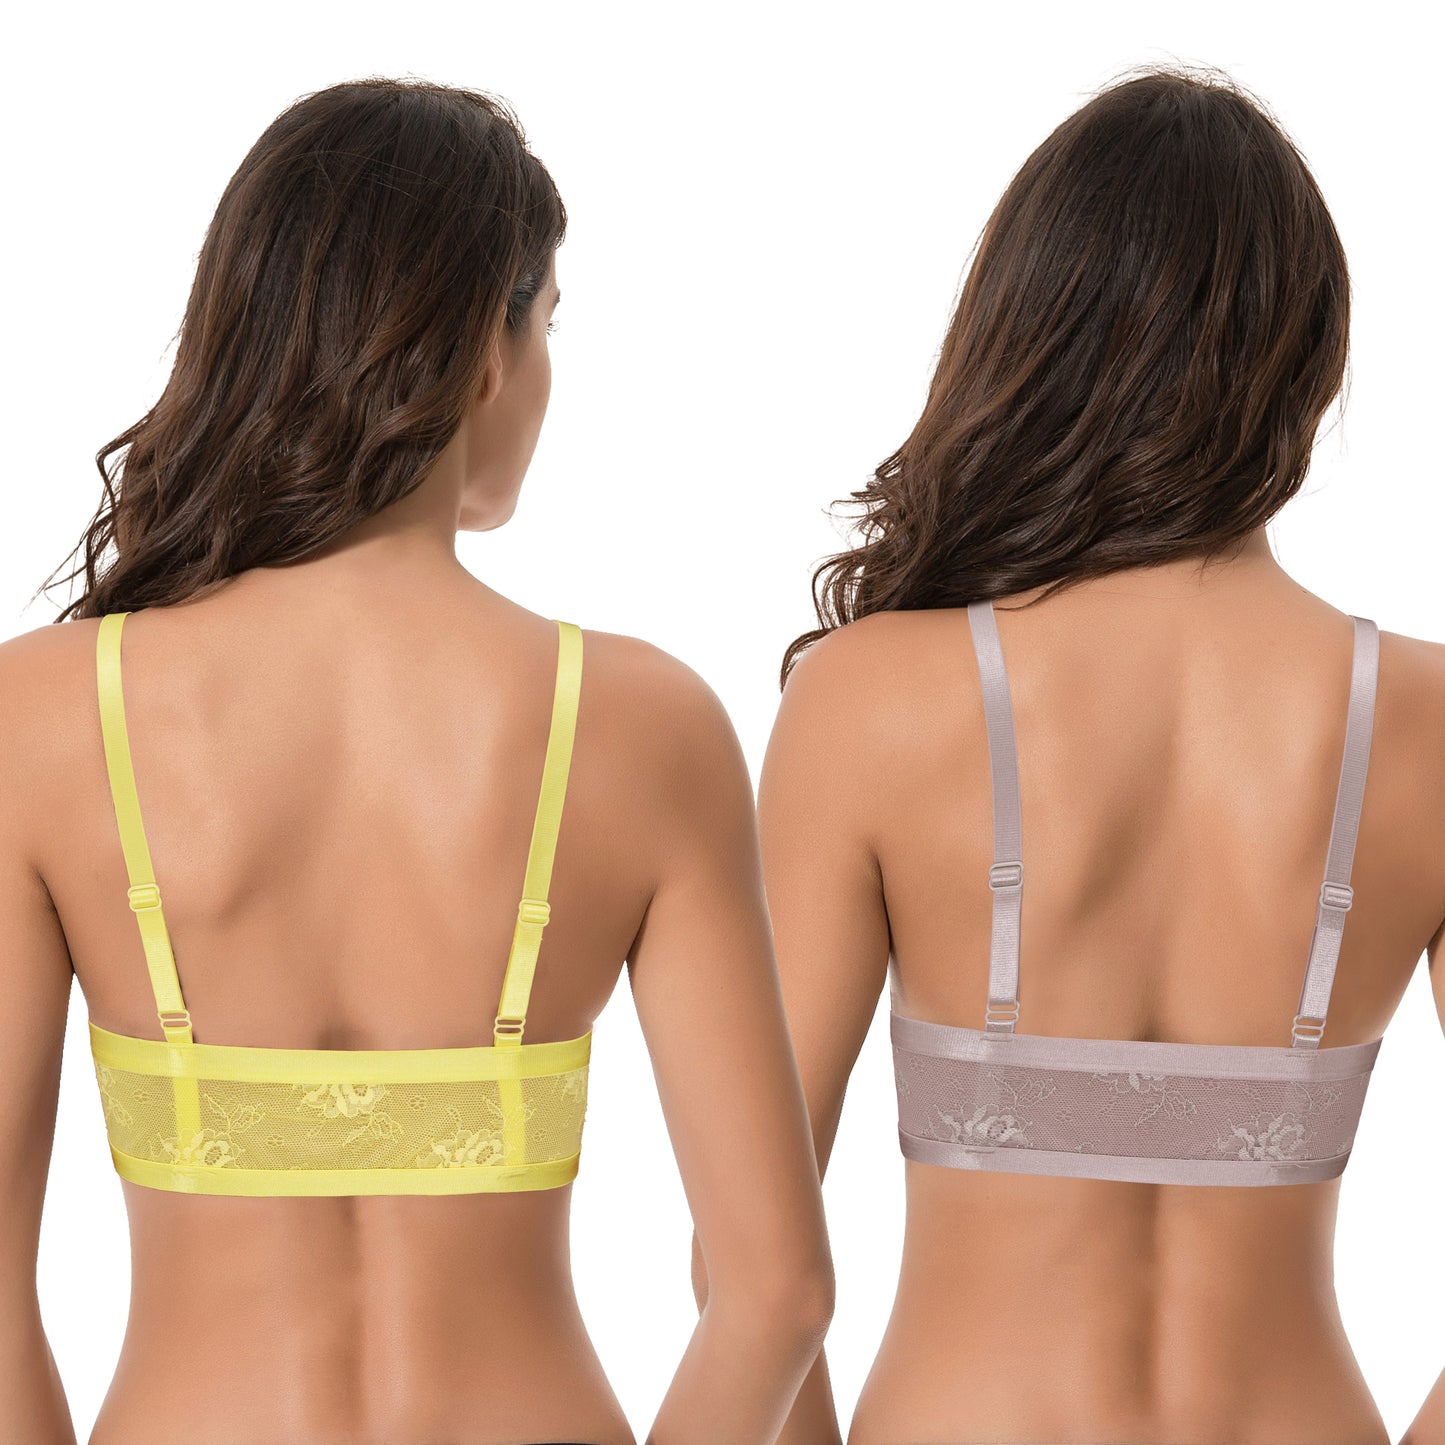 Women's Plus Size Full Coverage Underwire Front Close Bras-2PK-Yellow,Grayish Brown